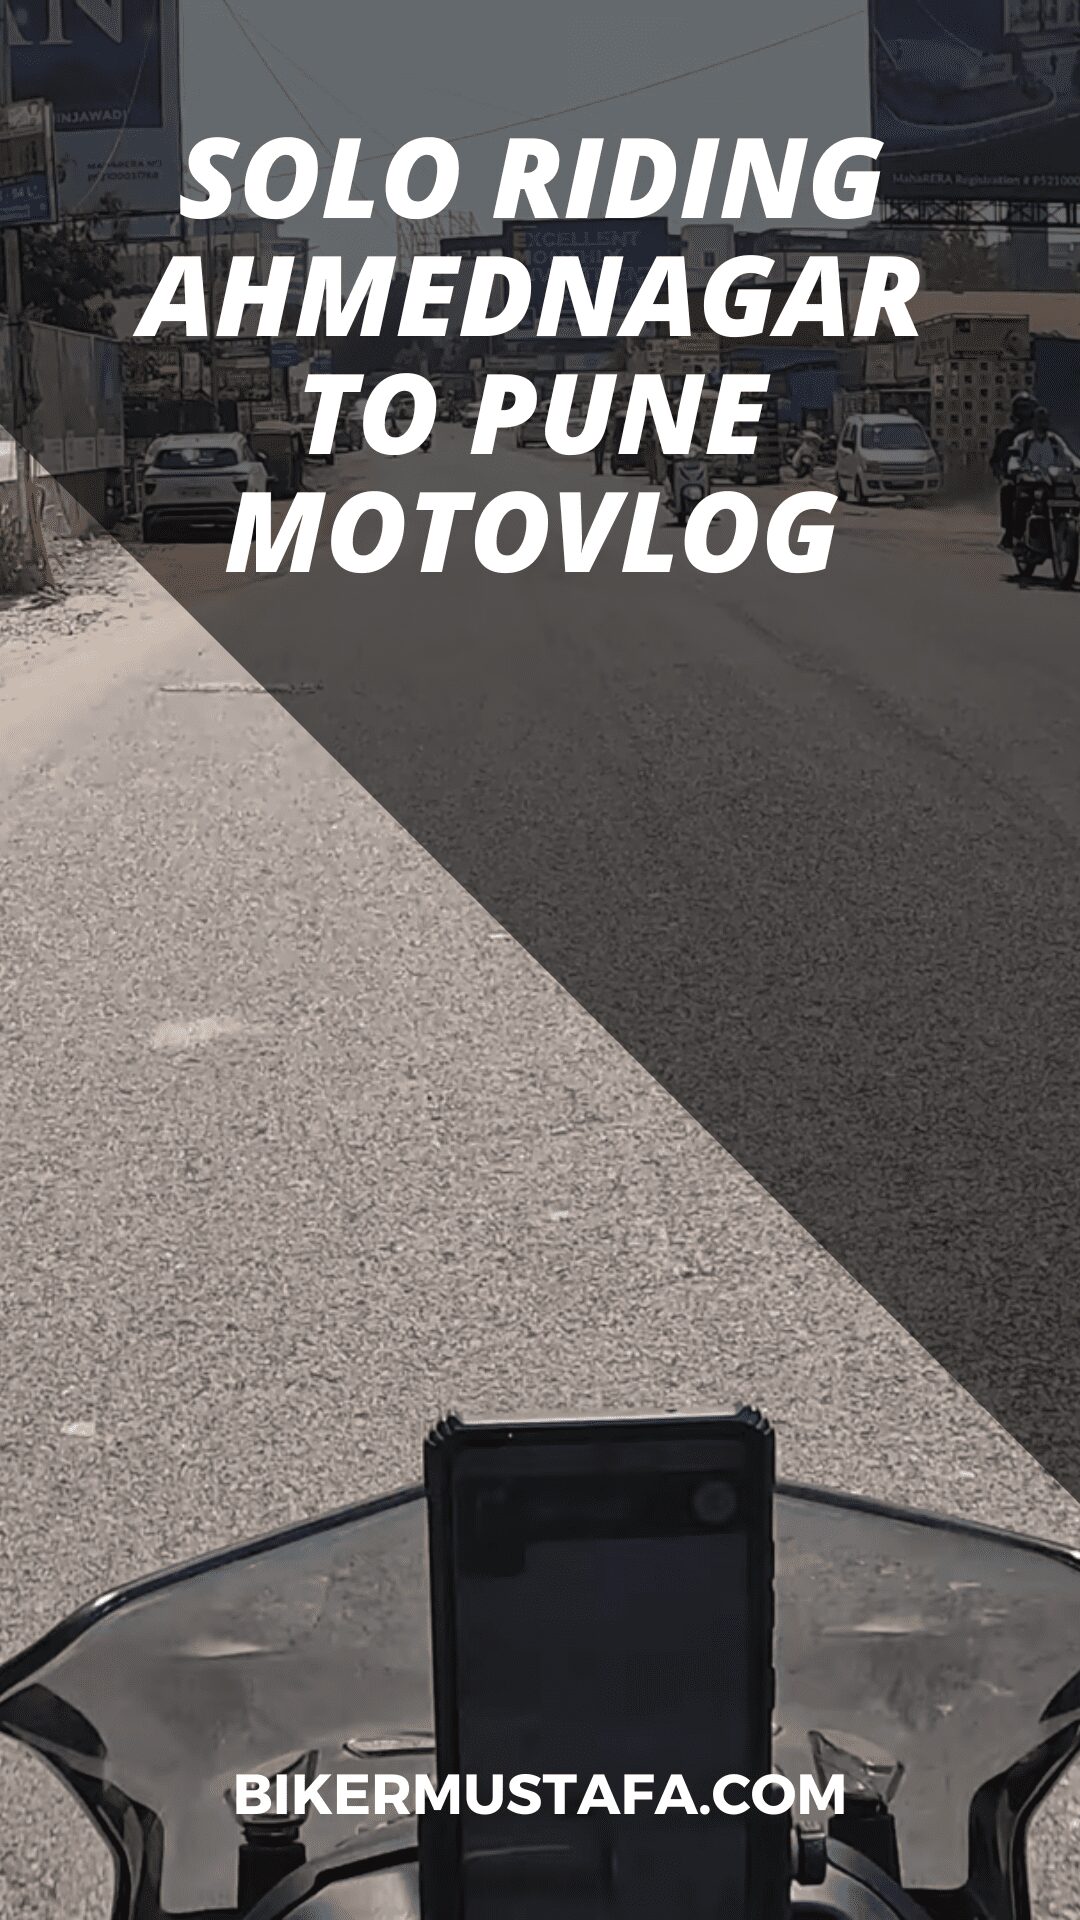 Solo Riding Ahmednagar to Pune Motovlog